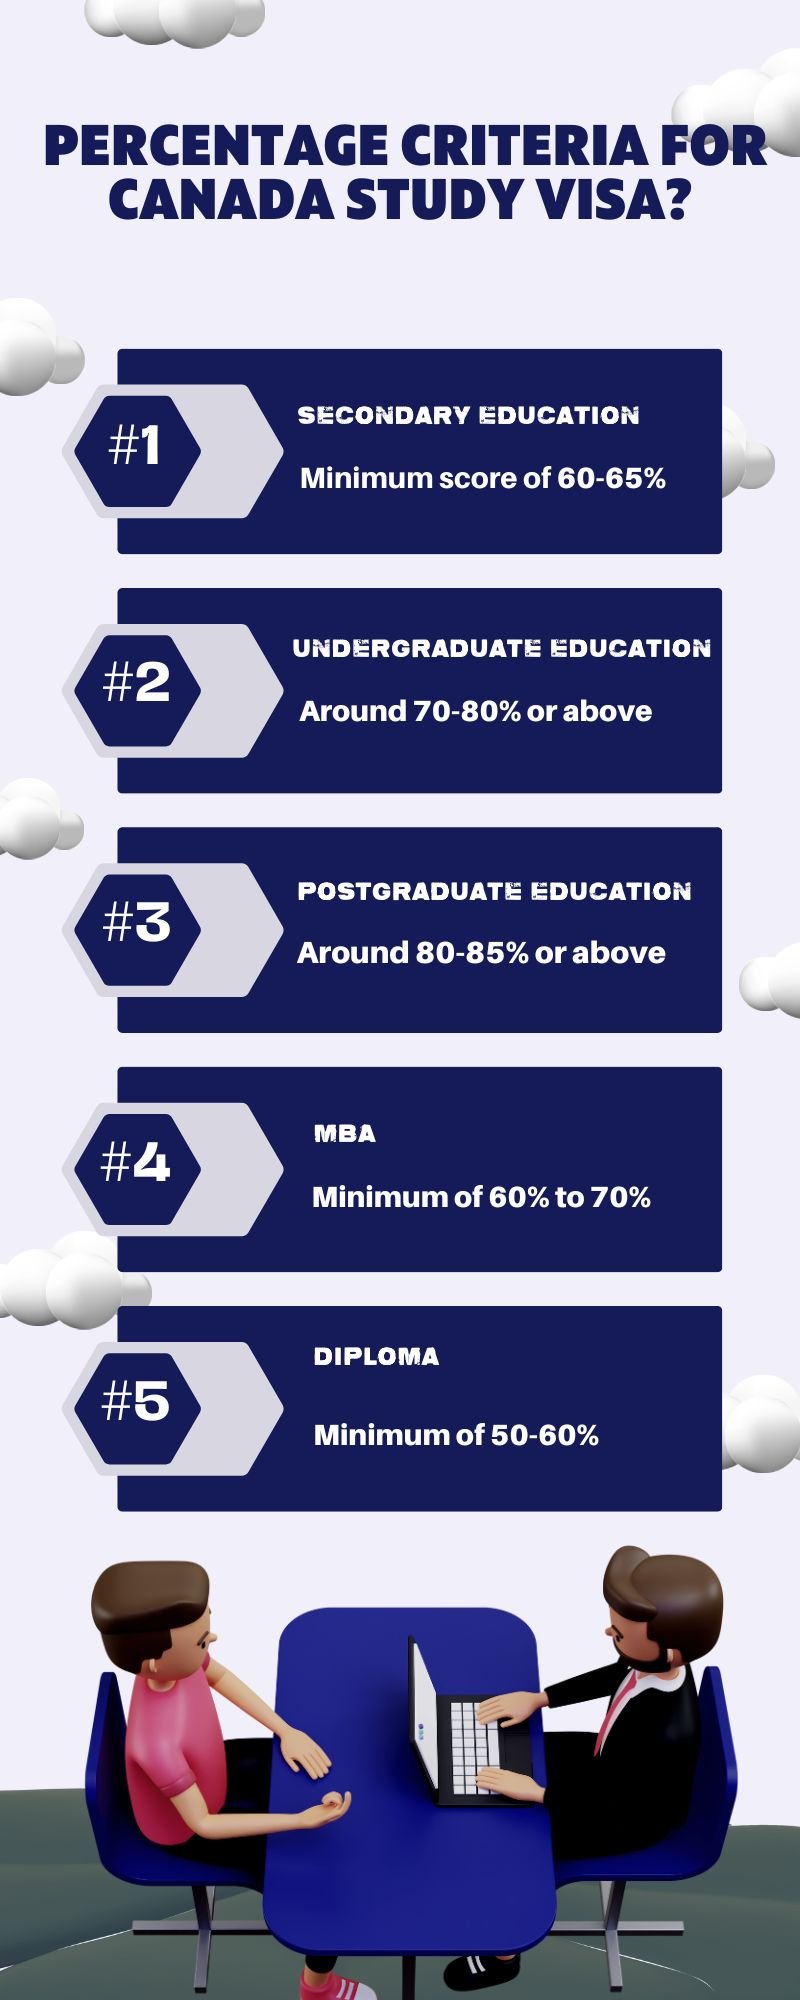 percentage criteria for canada study visa infographic